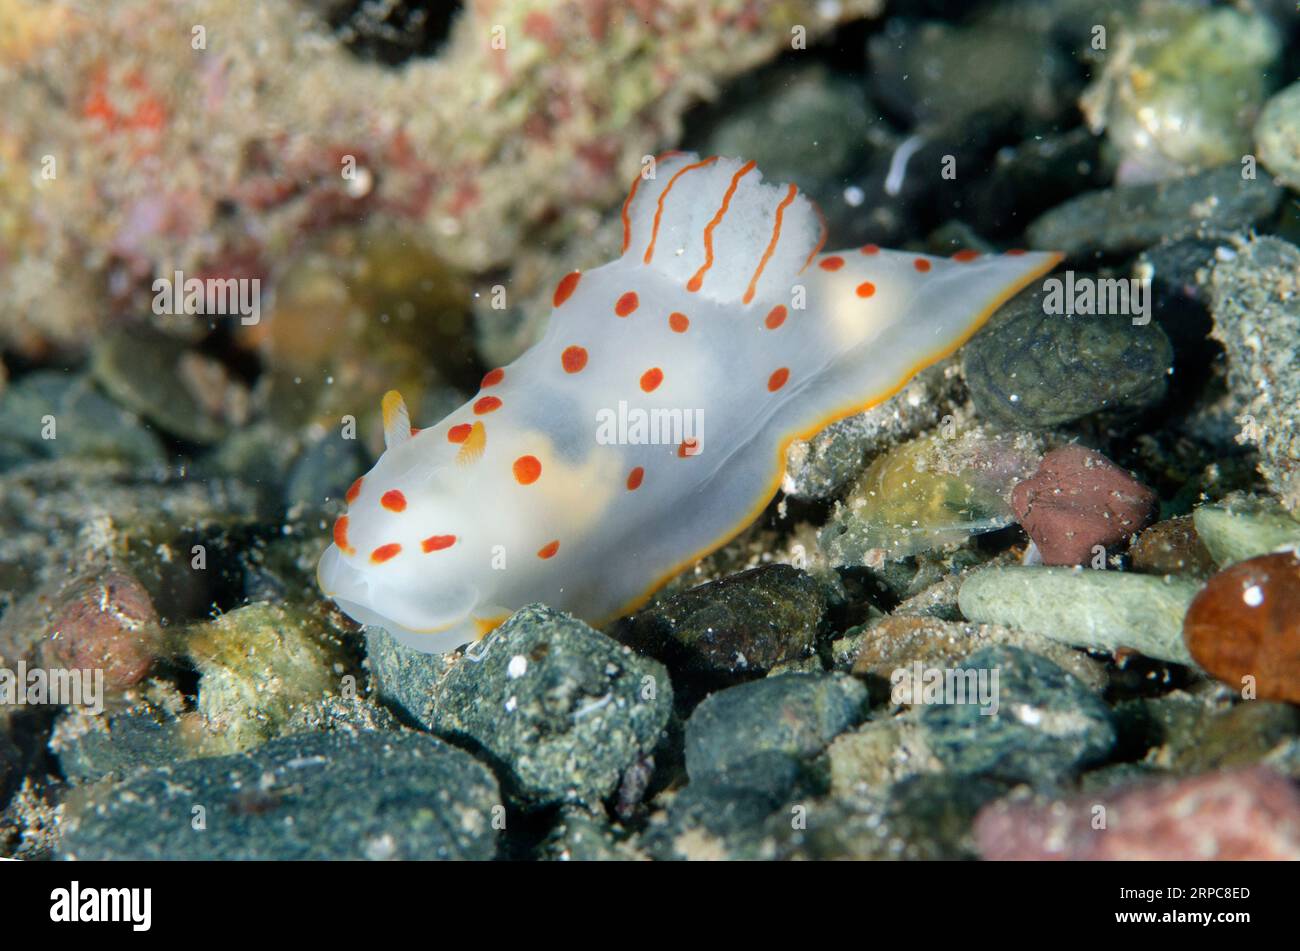 Ceylon Gymnodoris Nudibranch, Gymnodoris ceylonica, Gemaf dive site, Weda, Halmahera, North Maluku, Indonesia, Halmahera Sea Stock Photo